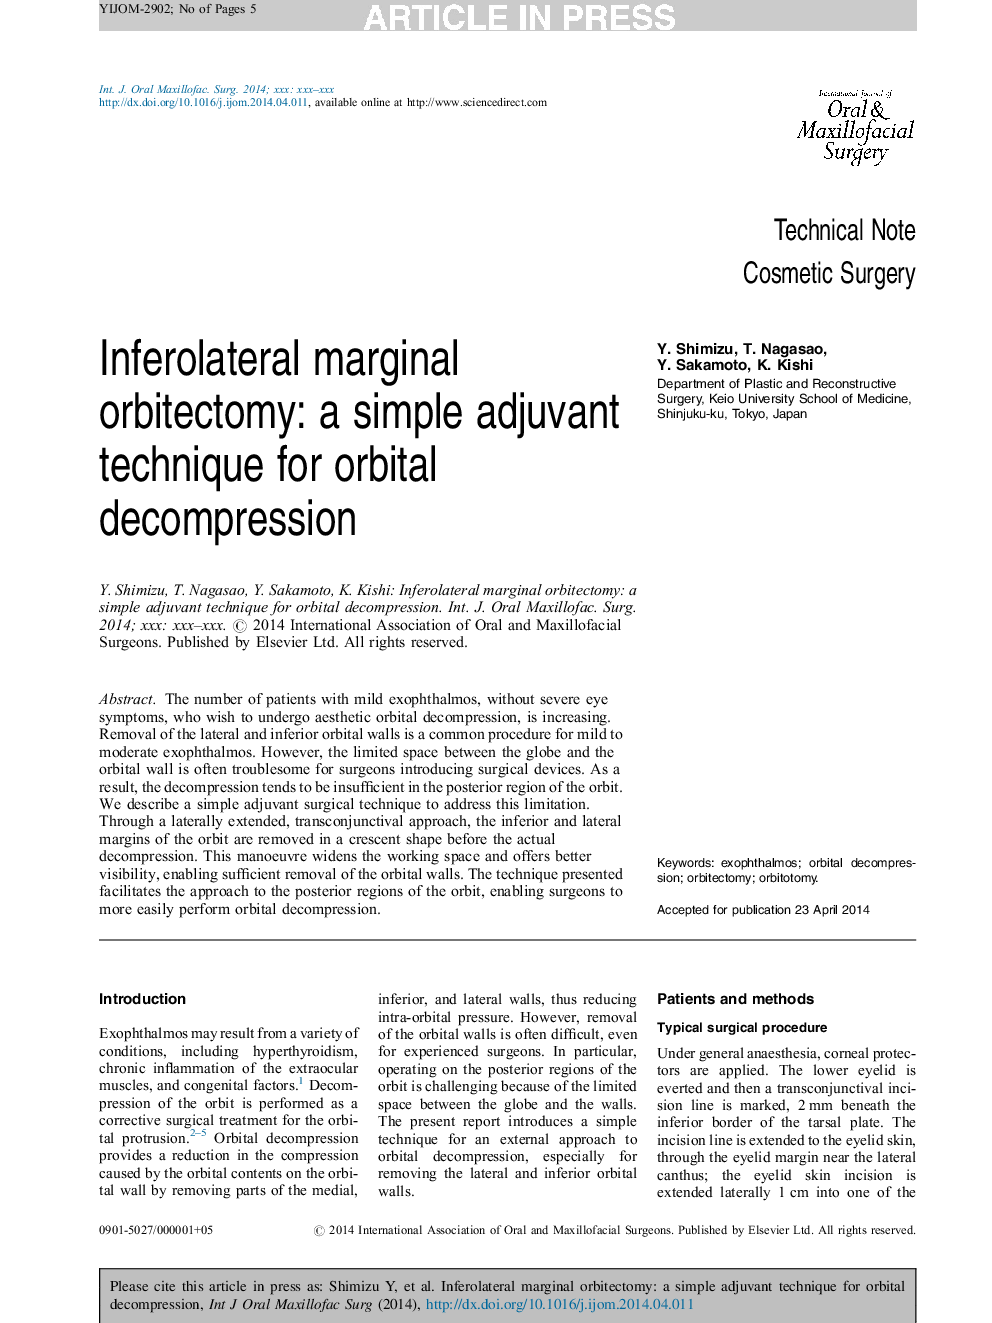 Inferolateral marginal orbitectomy: a simple adjuvant technique for orbital decompression